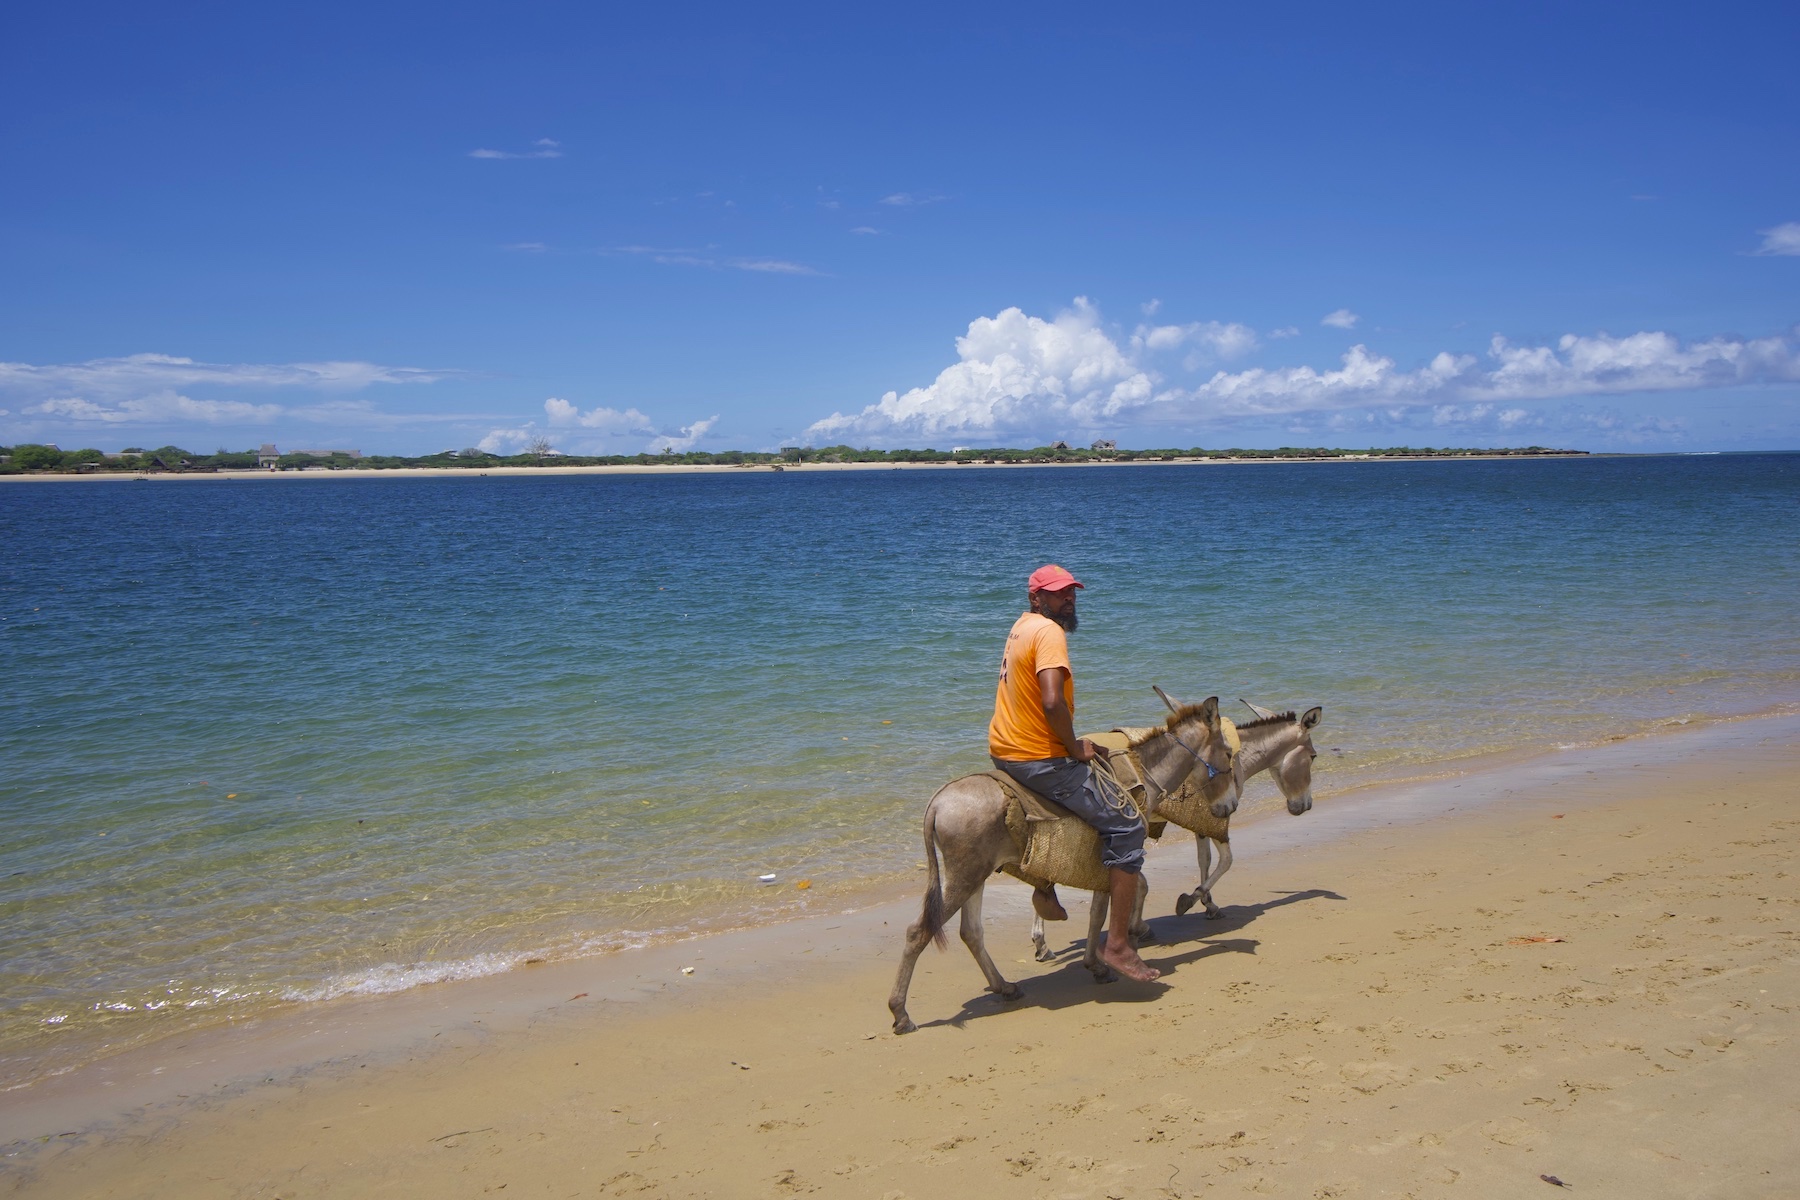 Man riding a donkey at Shela beach